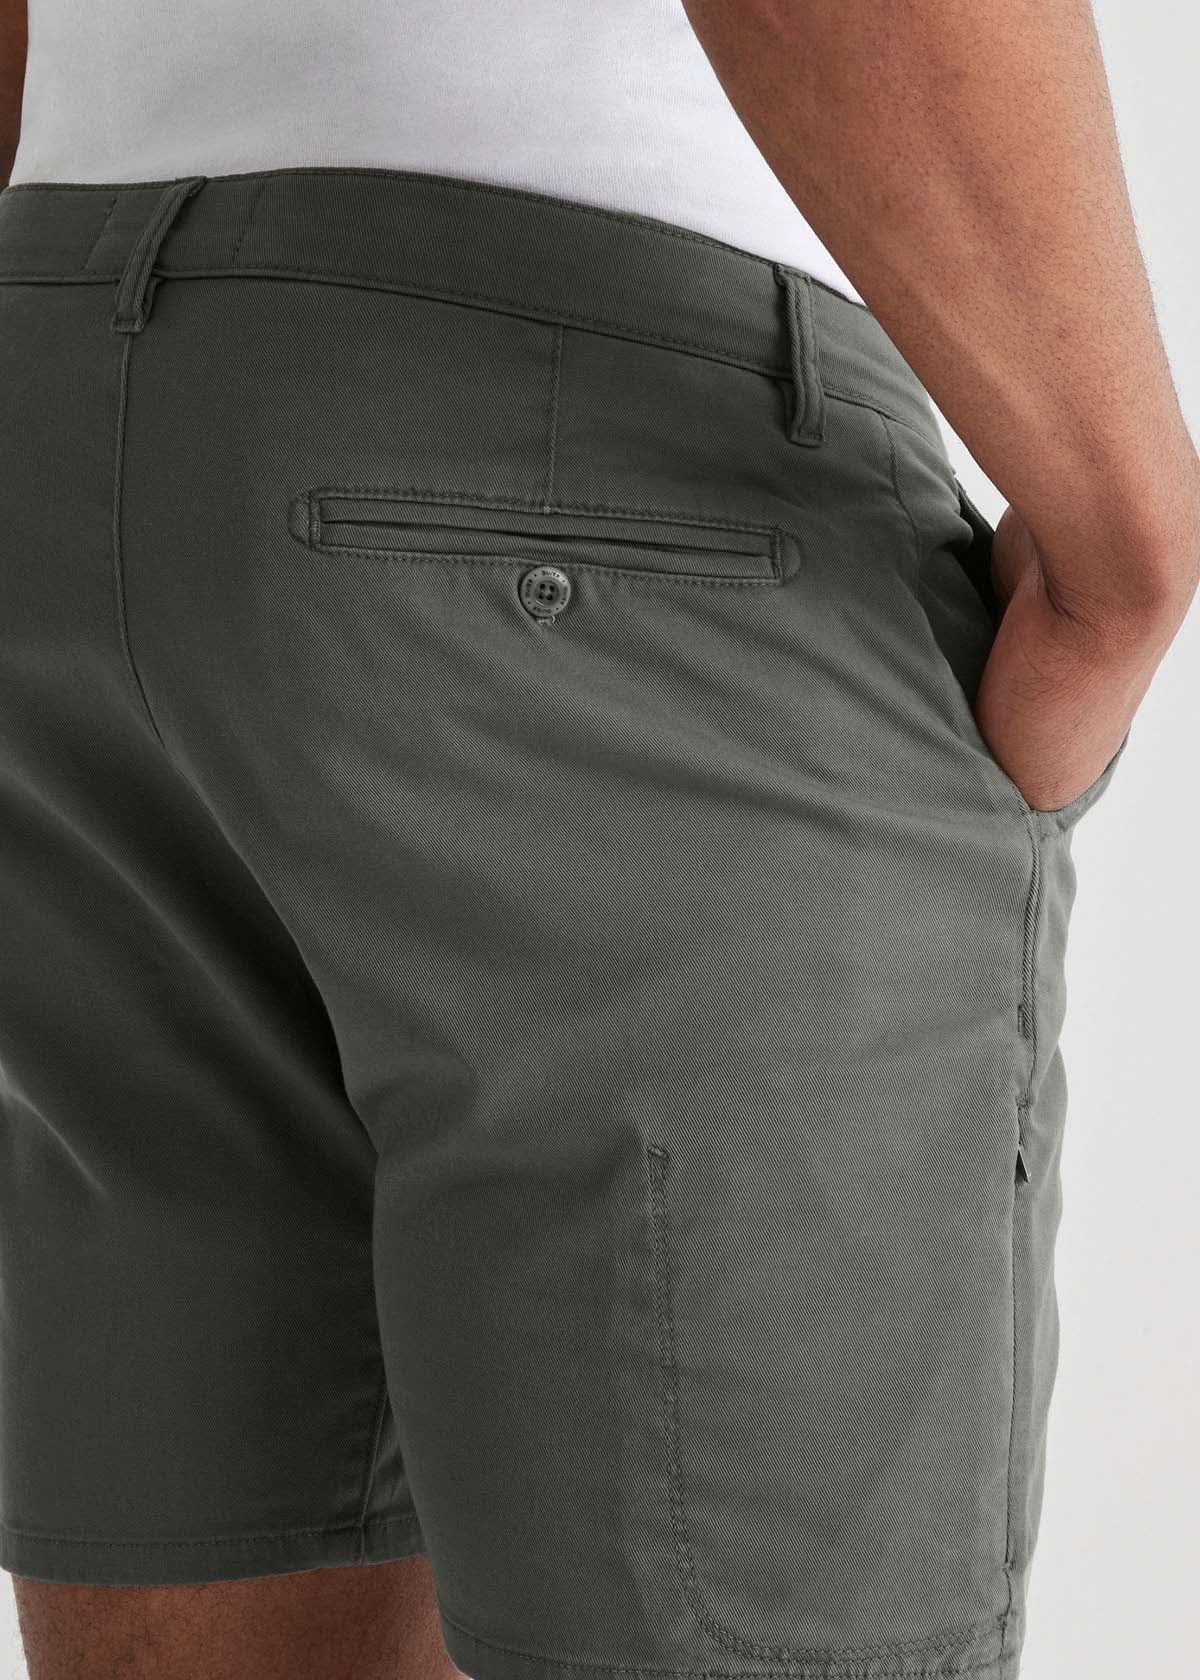 mens lightweight light green-grey shorts back pocket button